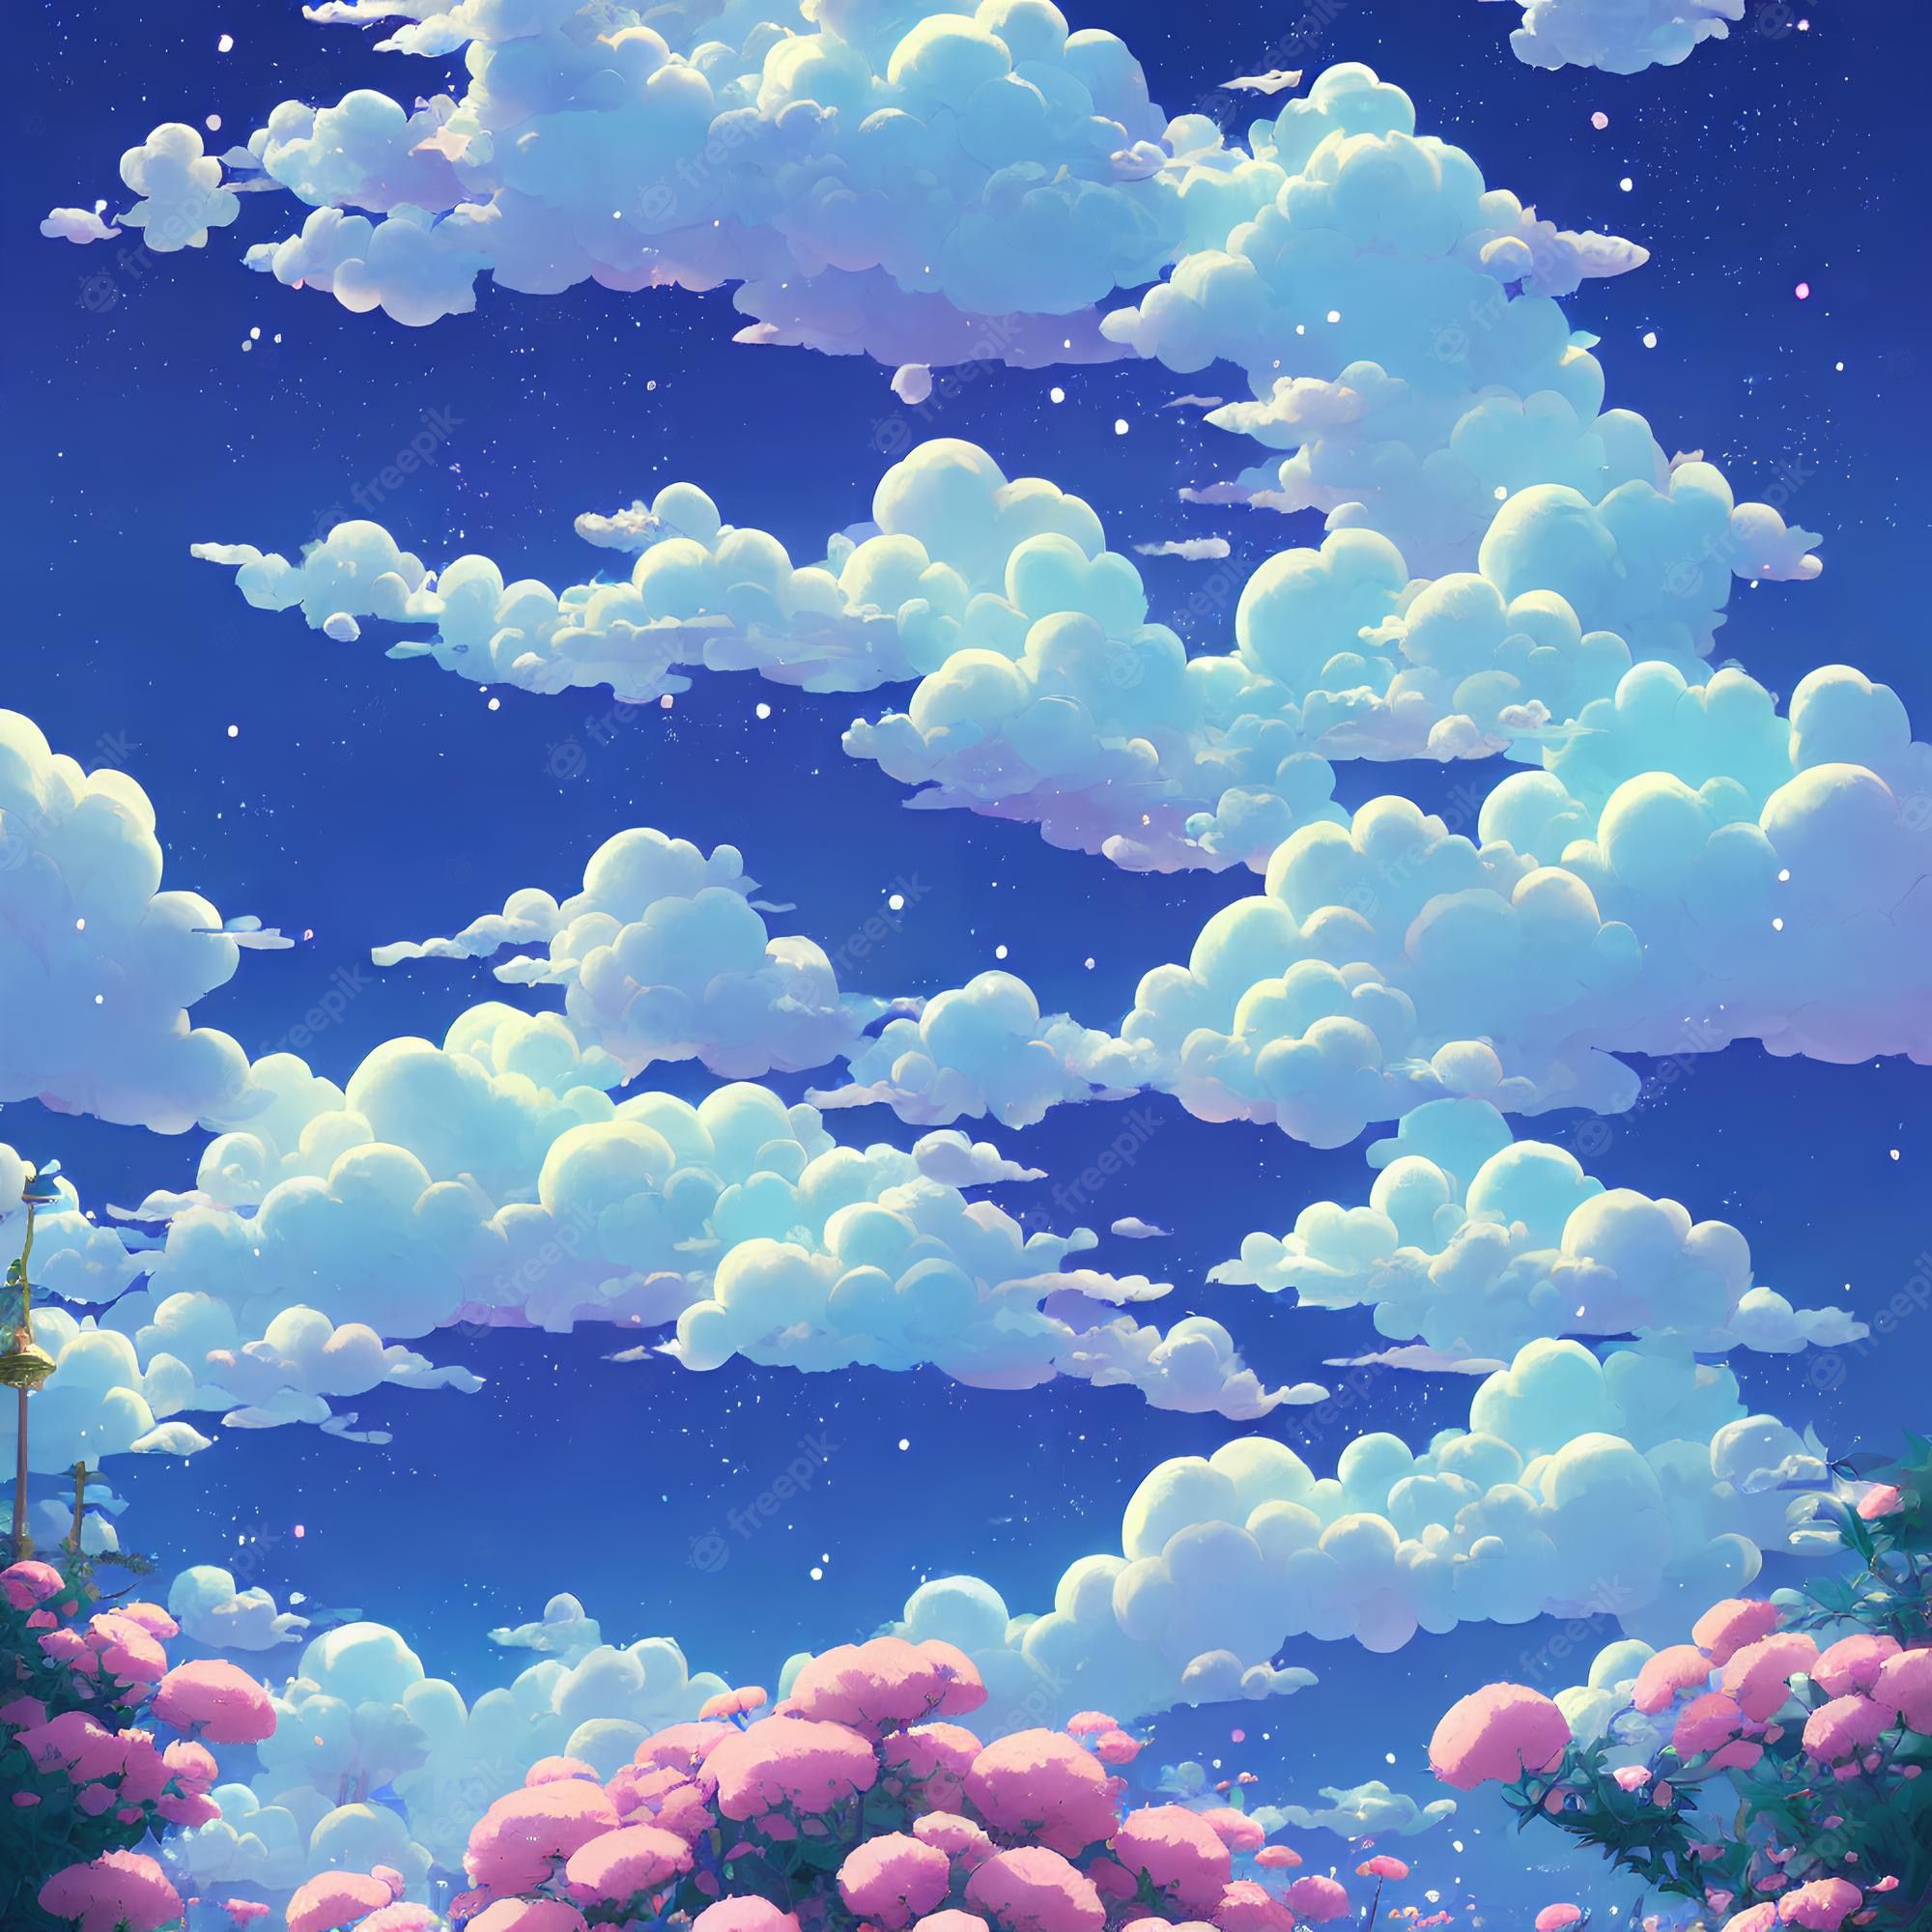 Anime Wallpaper Image